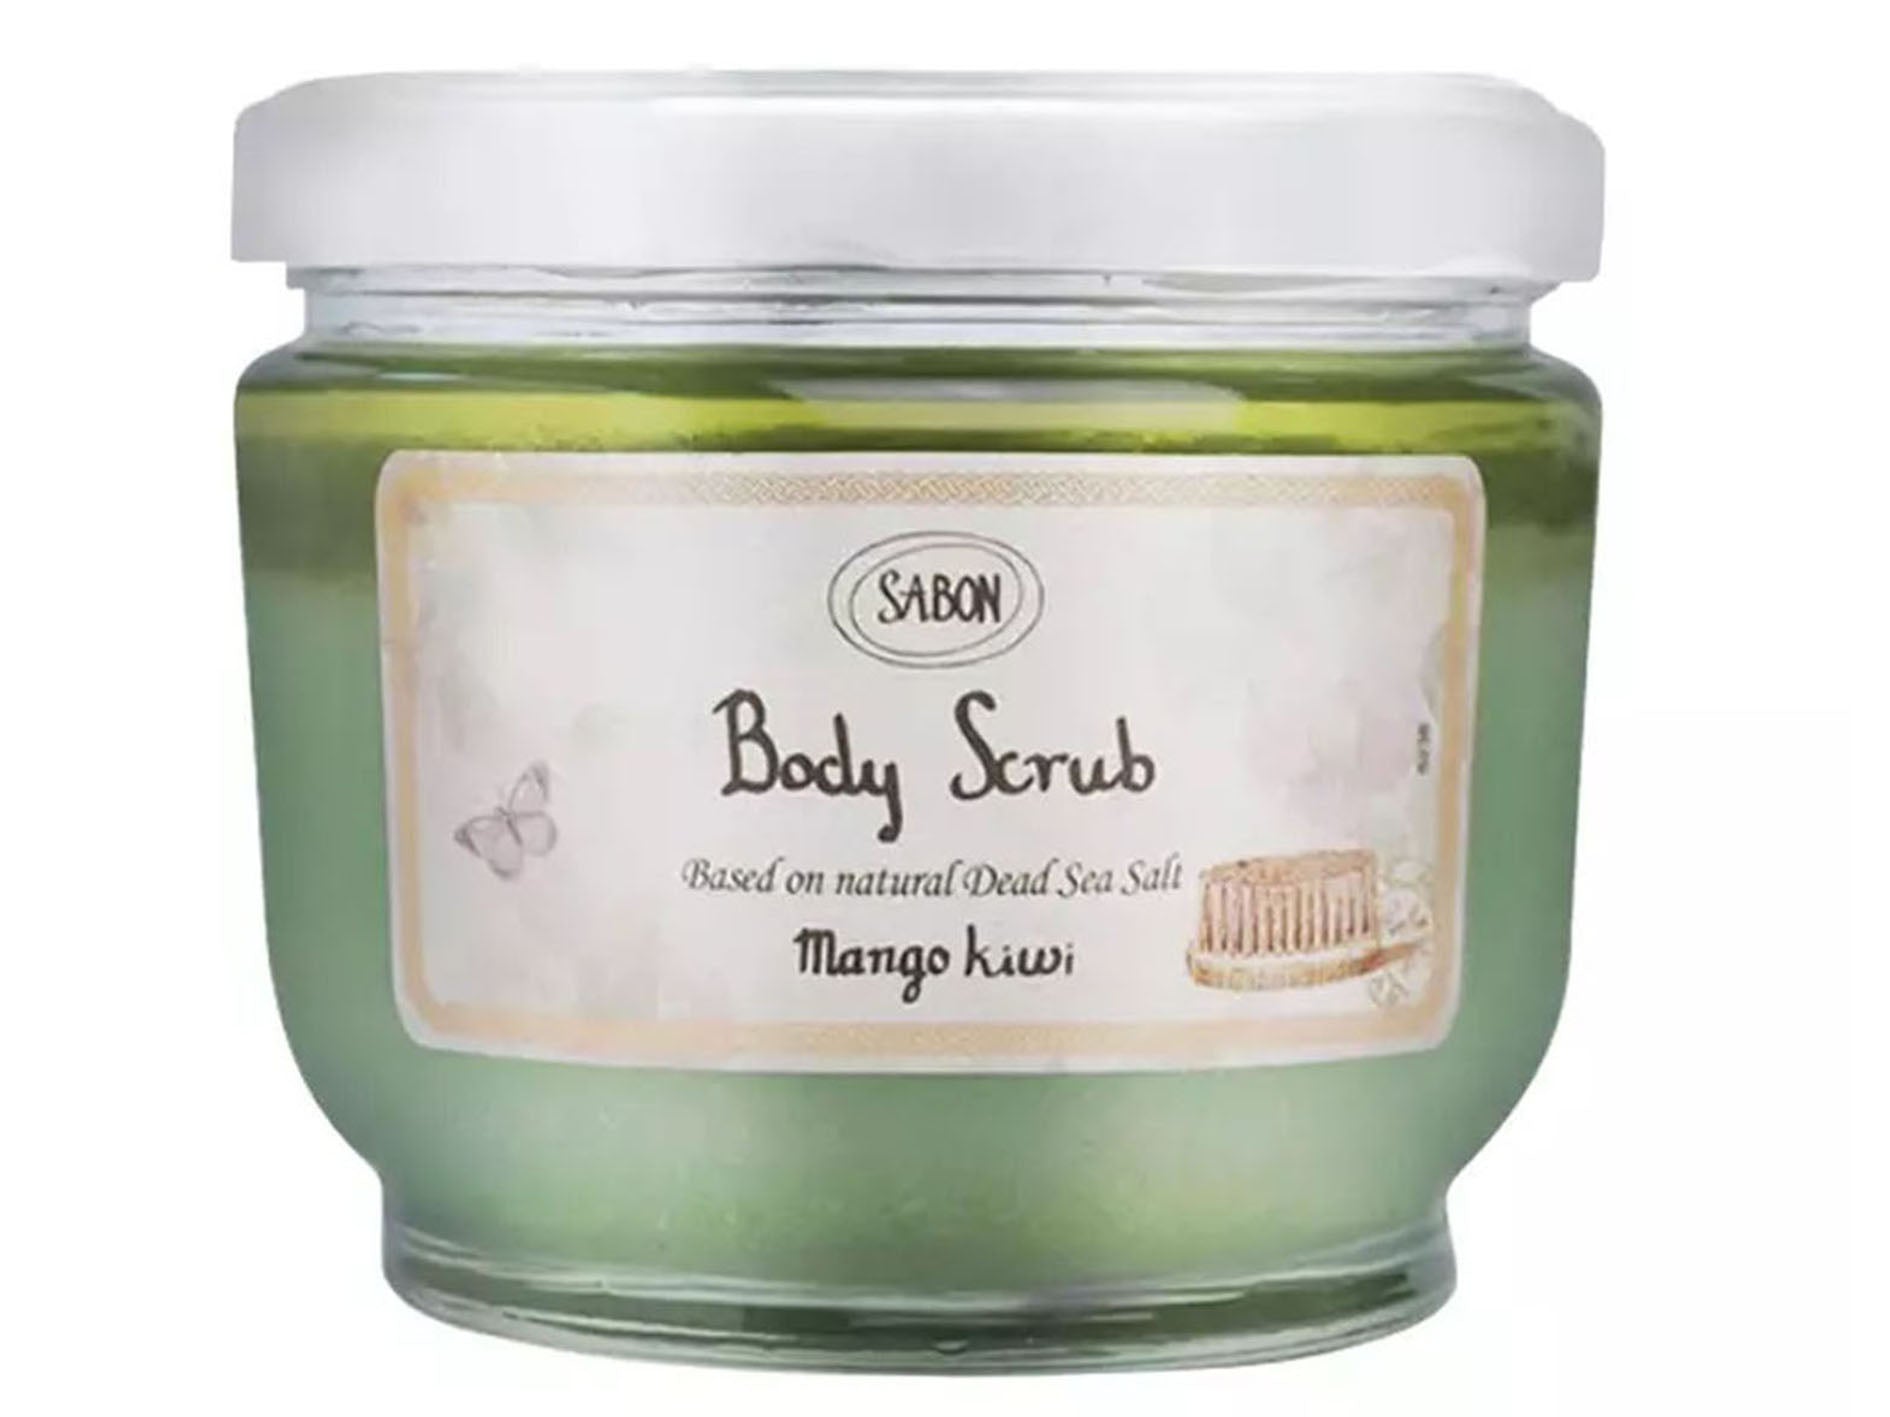 SABON Mango Kiwi Dead Sea Salt Purifying Repair Body Scrub | Body Scrub Mango Kiwi 600g